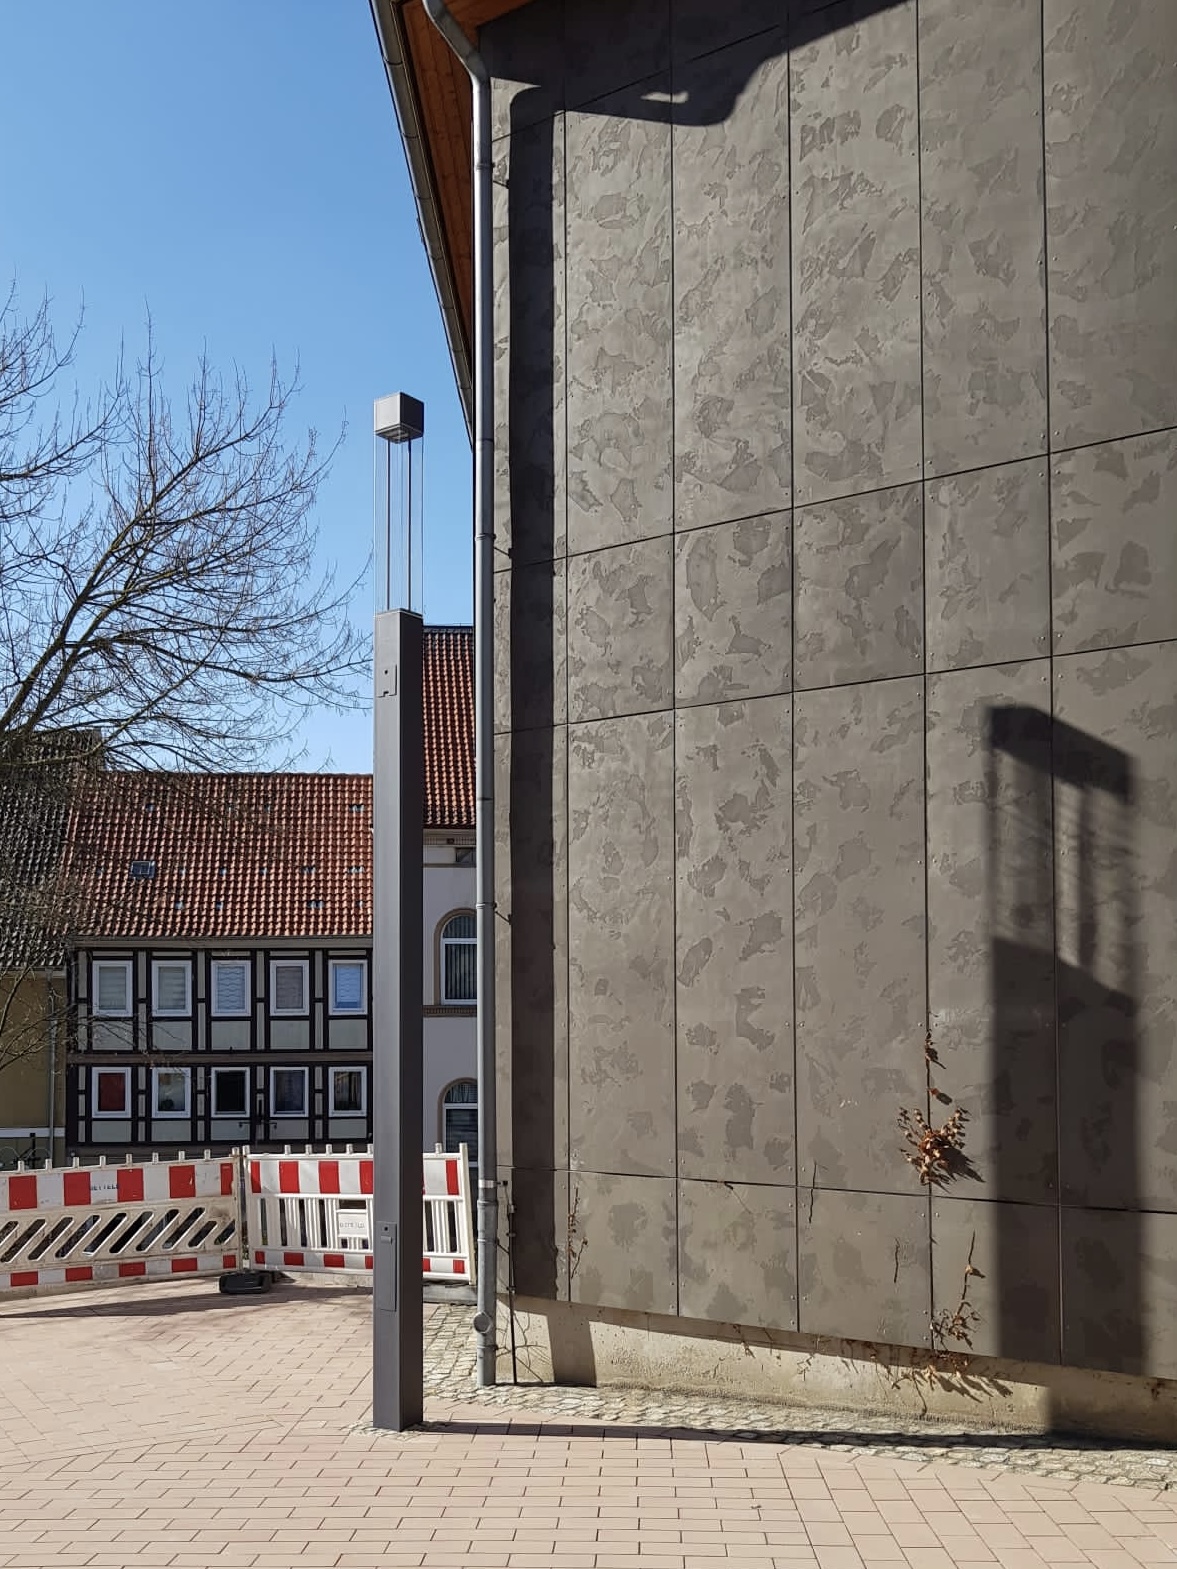 Bockenem | Baufortschritt an historischer Stelle